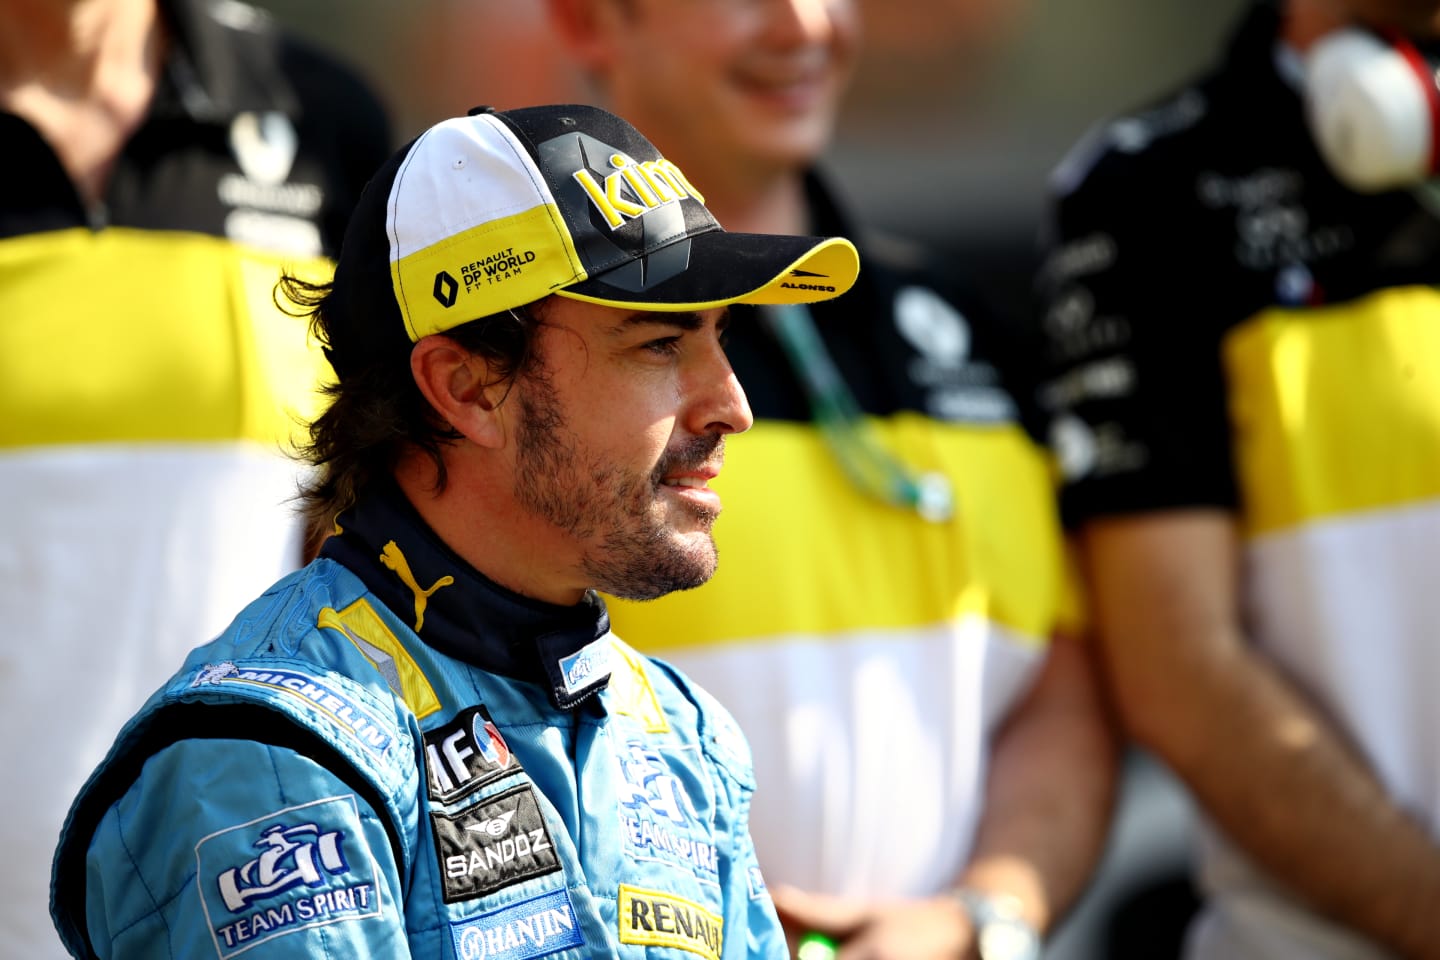 ABU DHABI, UNITED ARAB EMIRATES - DECEMBER 13: Fernando Alonso of Spain and Renault Sport F1 poses